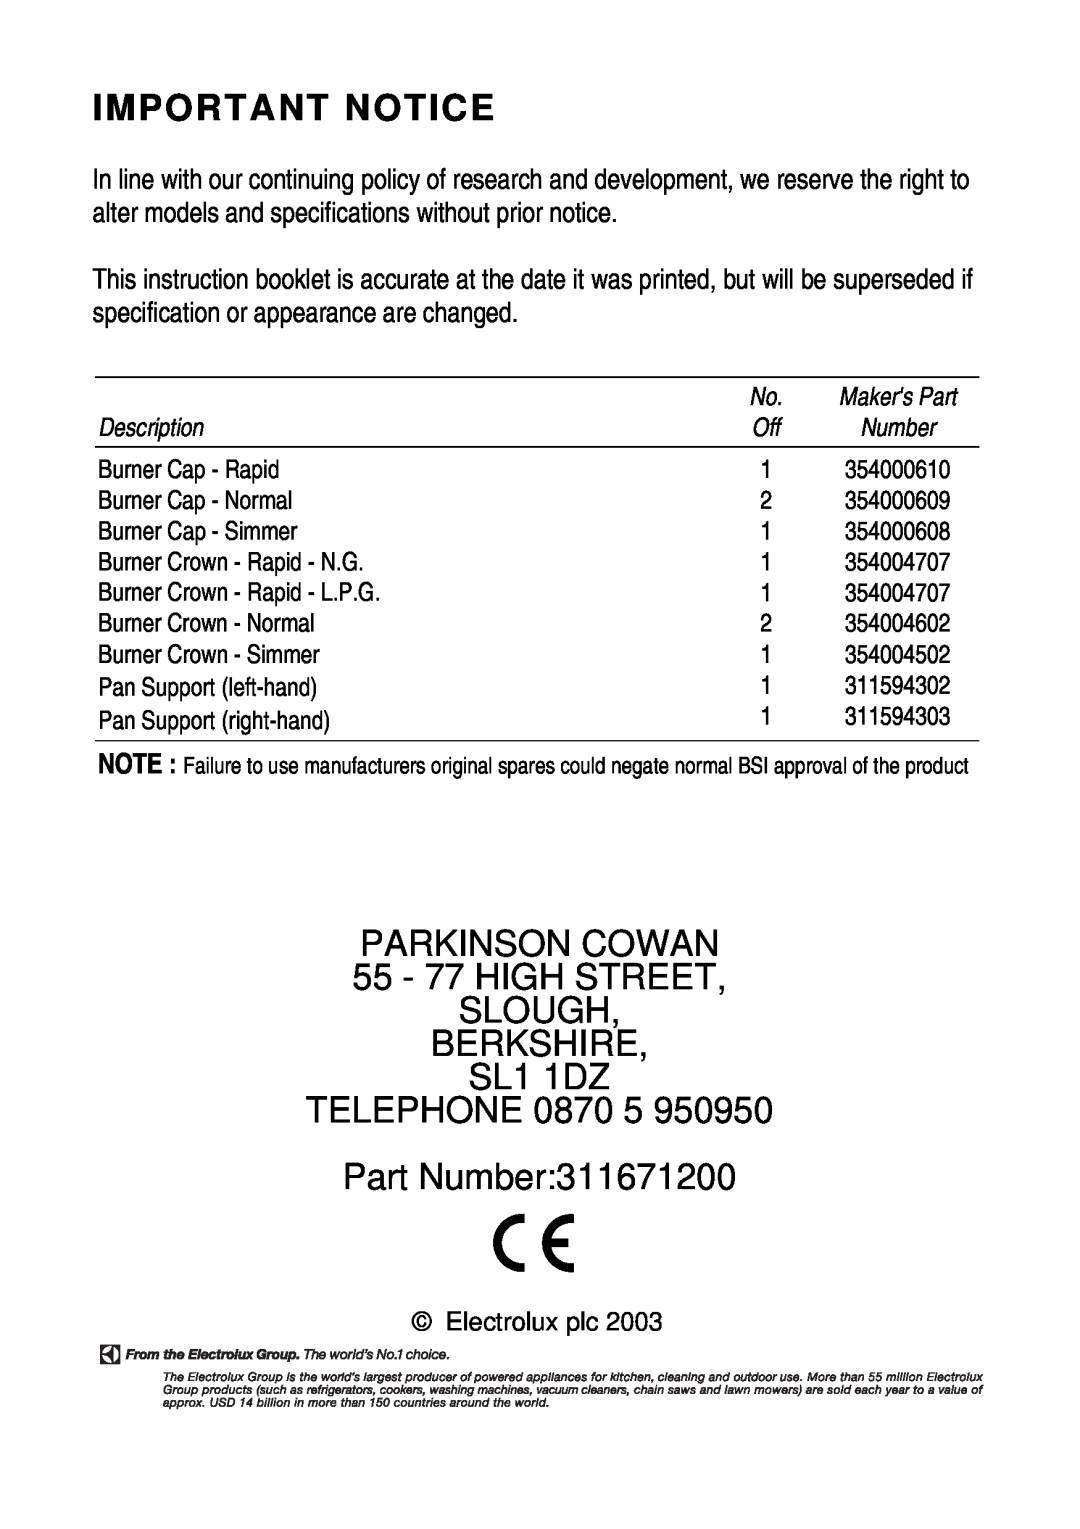 Parkinson Cowan SG 553 Important Notice, PARKINSON COWAN 55 - 77 HIGH STREET SLOUGH, BERKSHIRE SL1 1DZ TELEPHONE 